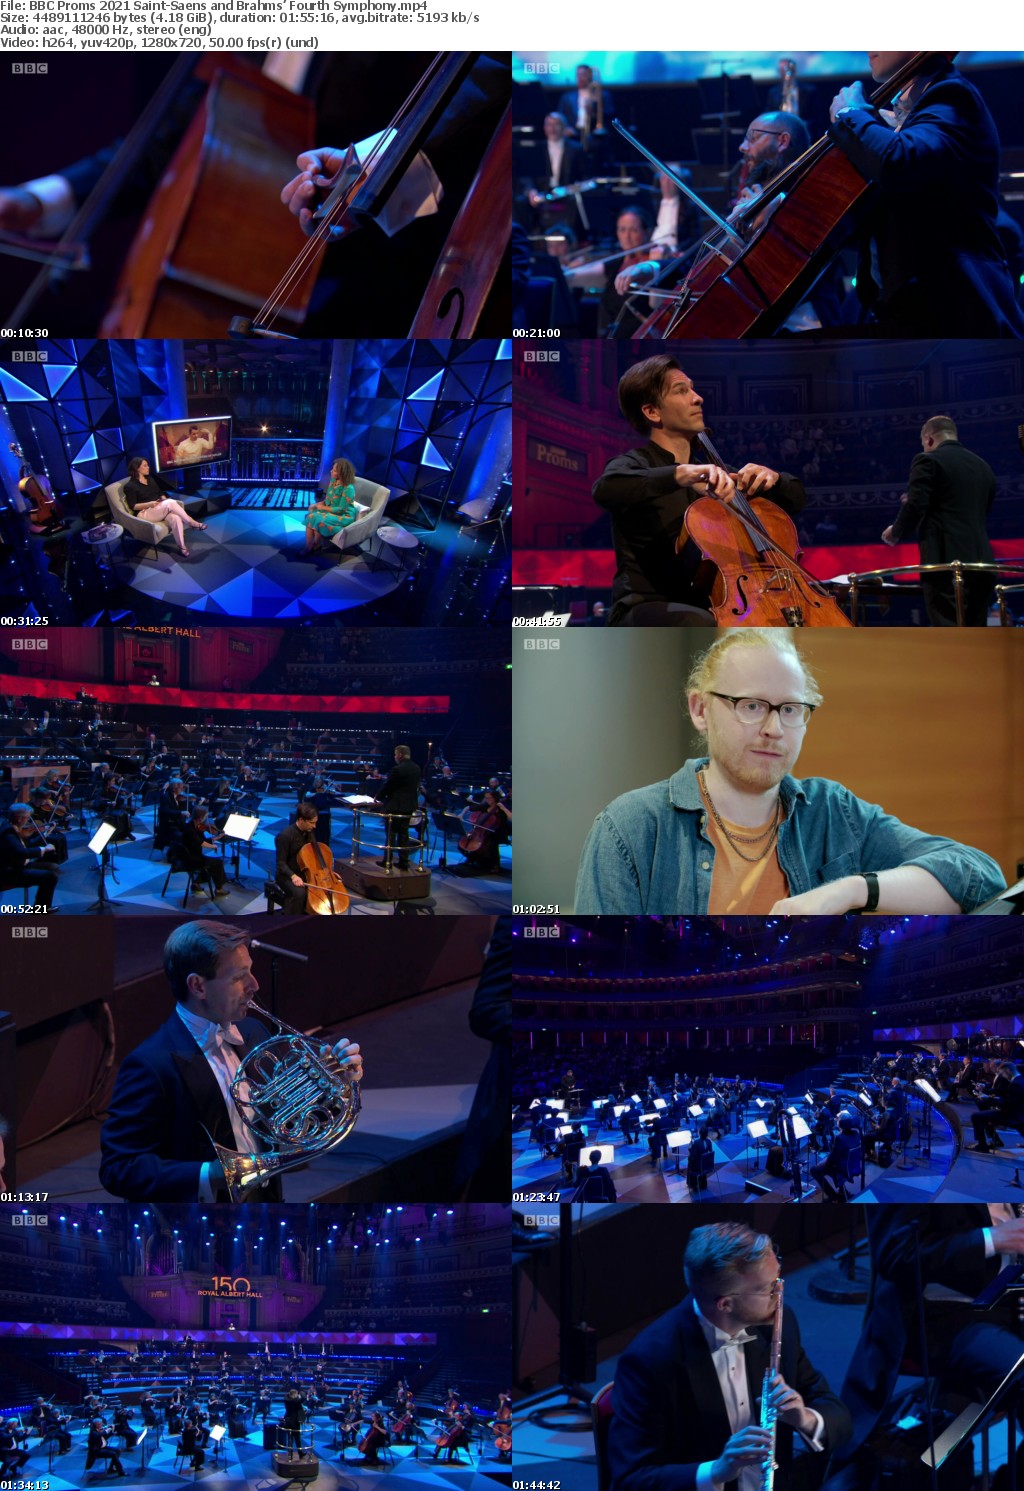 BBC Proms 2021 Saint-Saens and Brahms Fourth Symphony (1280x720p HD, 50fps, soft Eng subs)